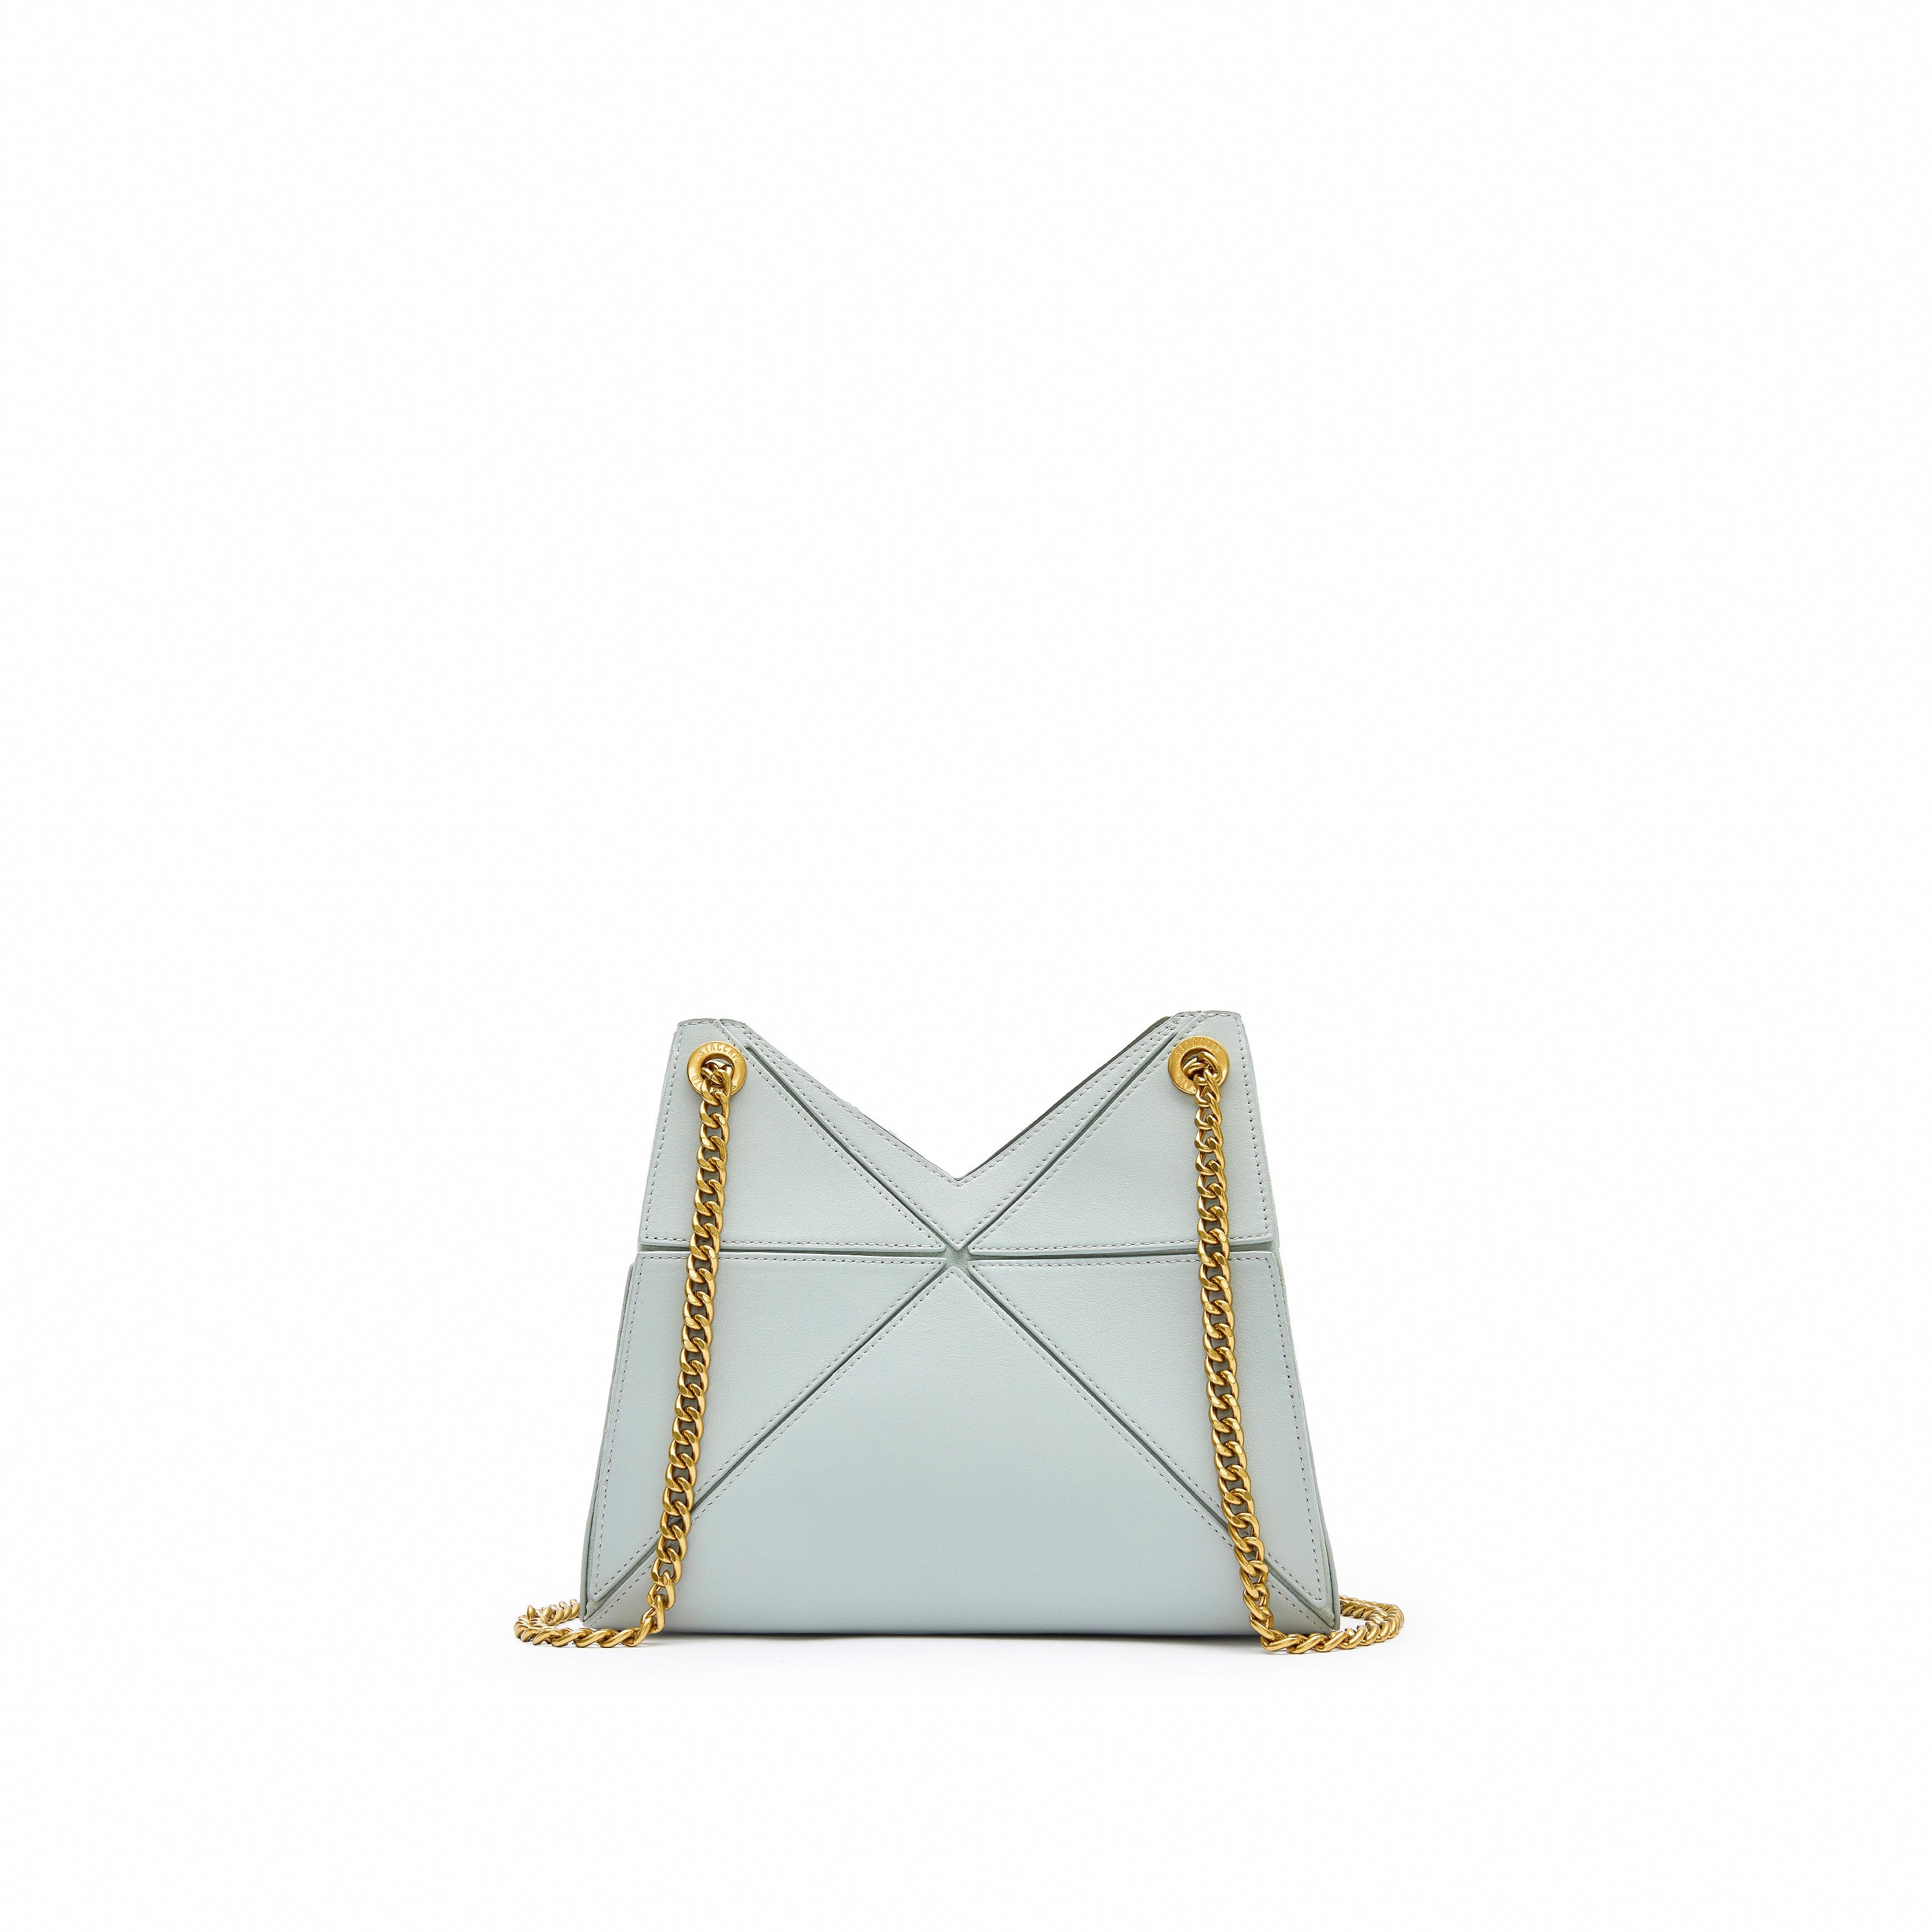 Mint Construction Foldable Leather Bag